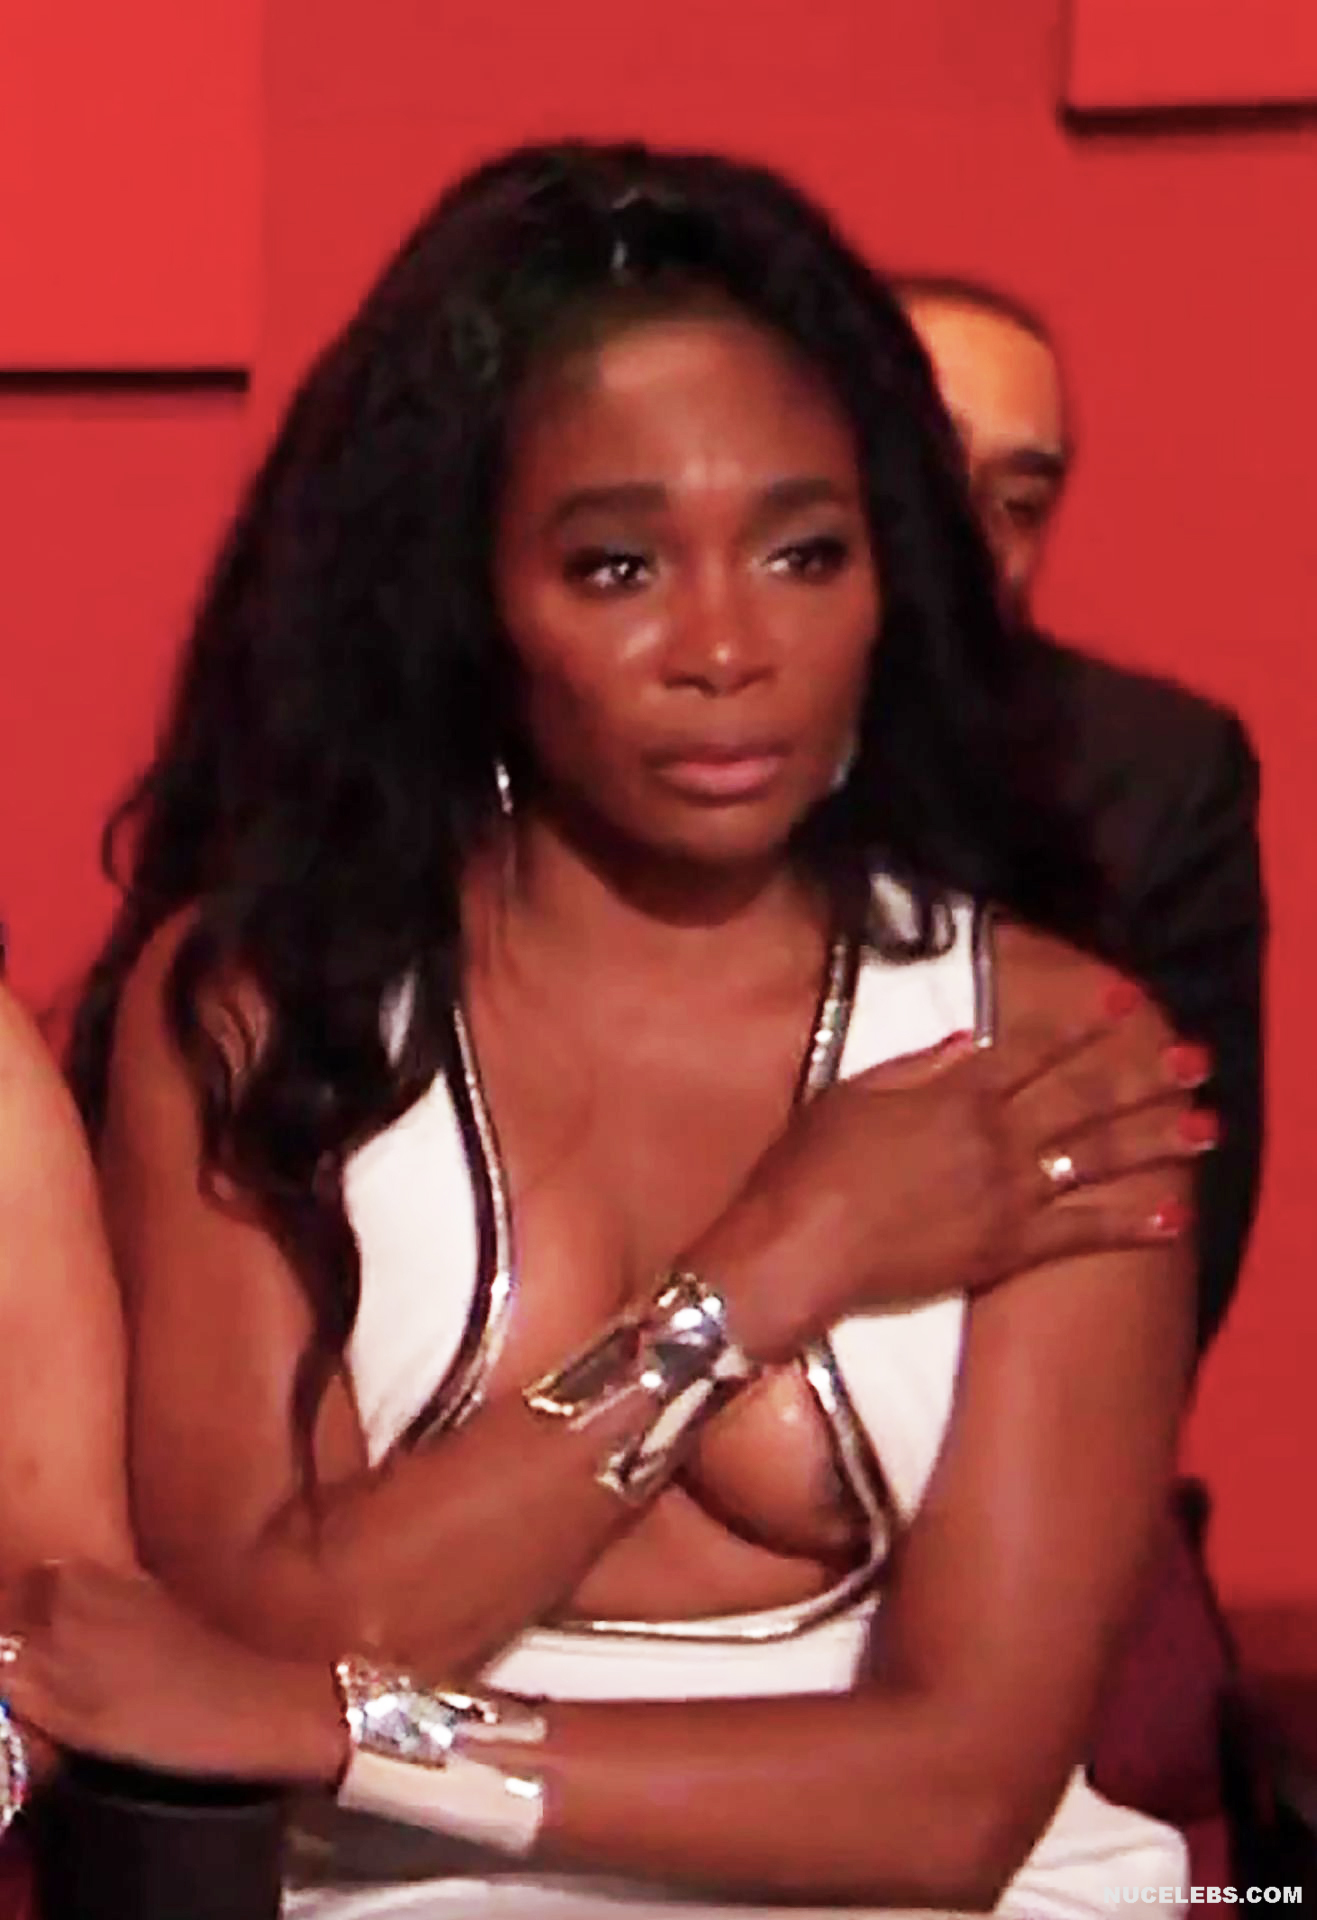 Venus Williams NipSlip Oops Moment during Oscars pic